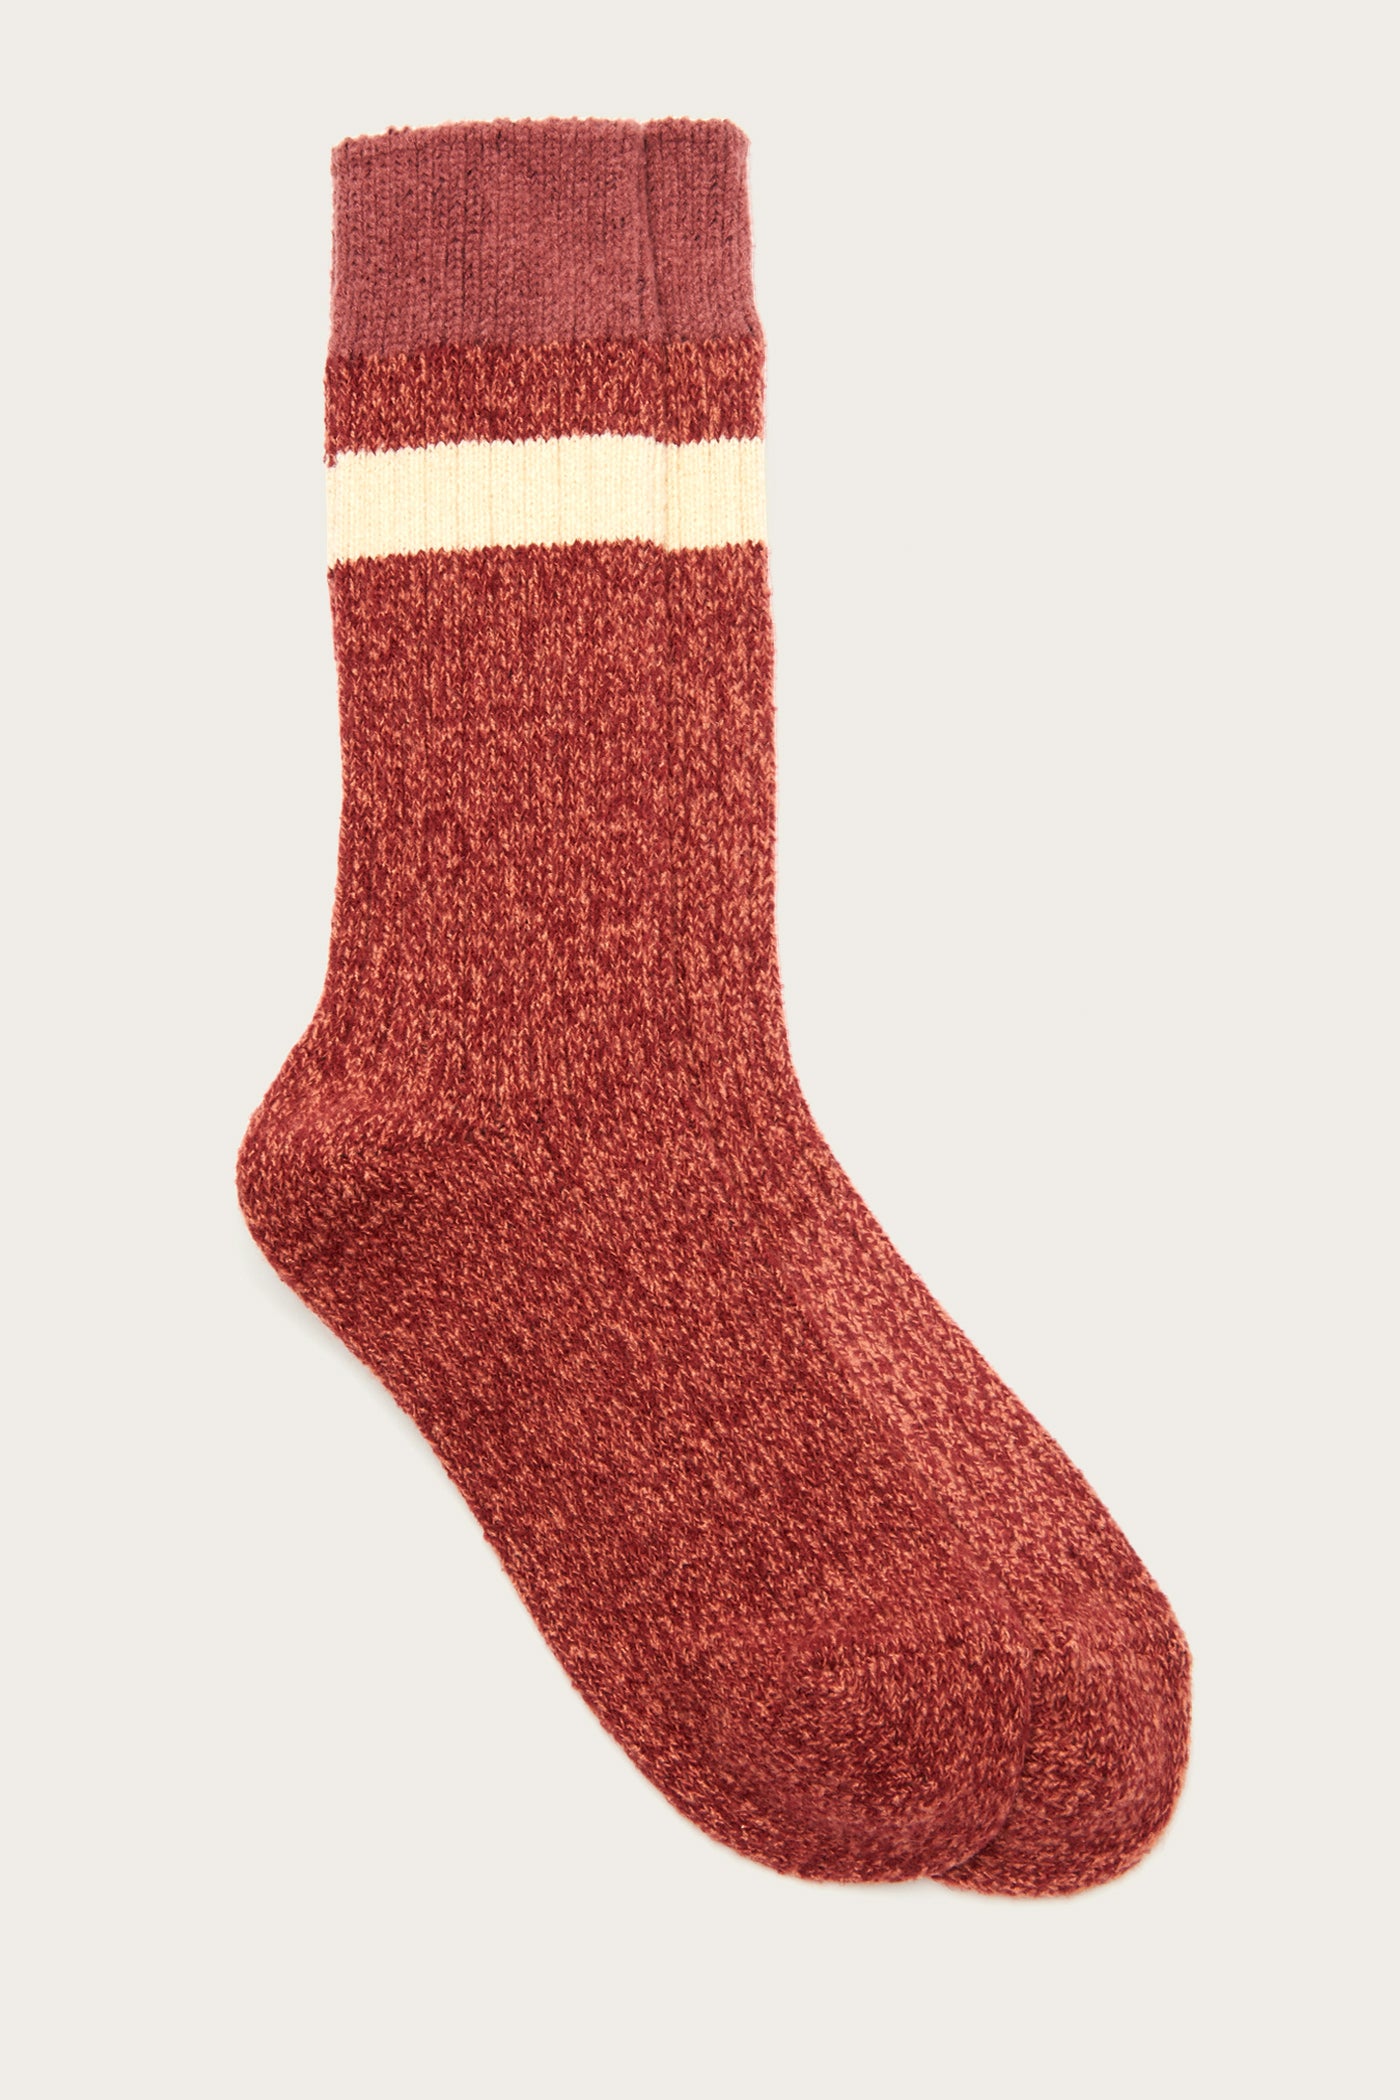 Supersoft Rib Knit Boot Sock - Women's 